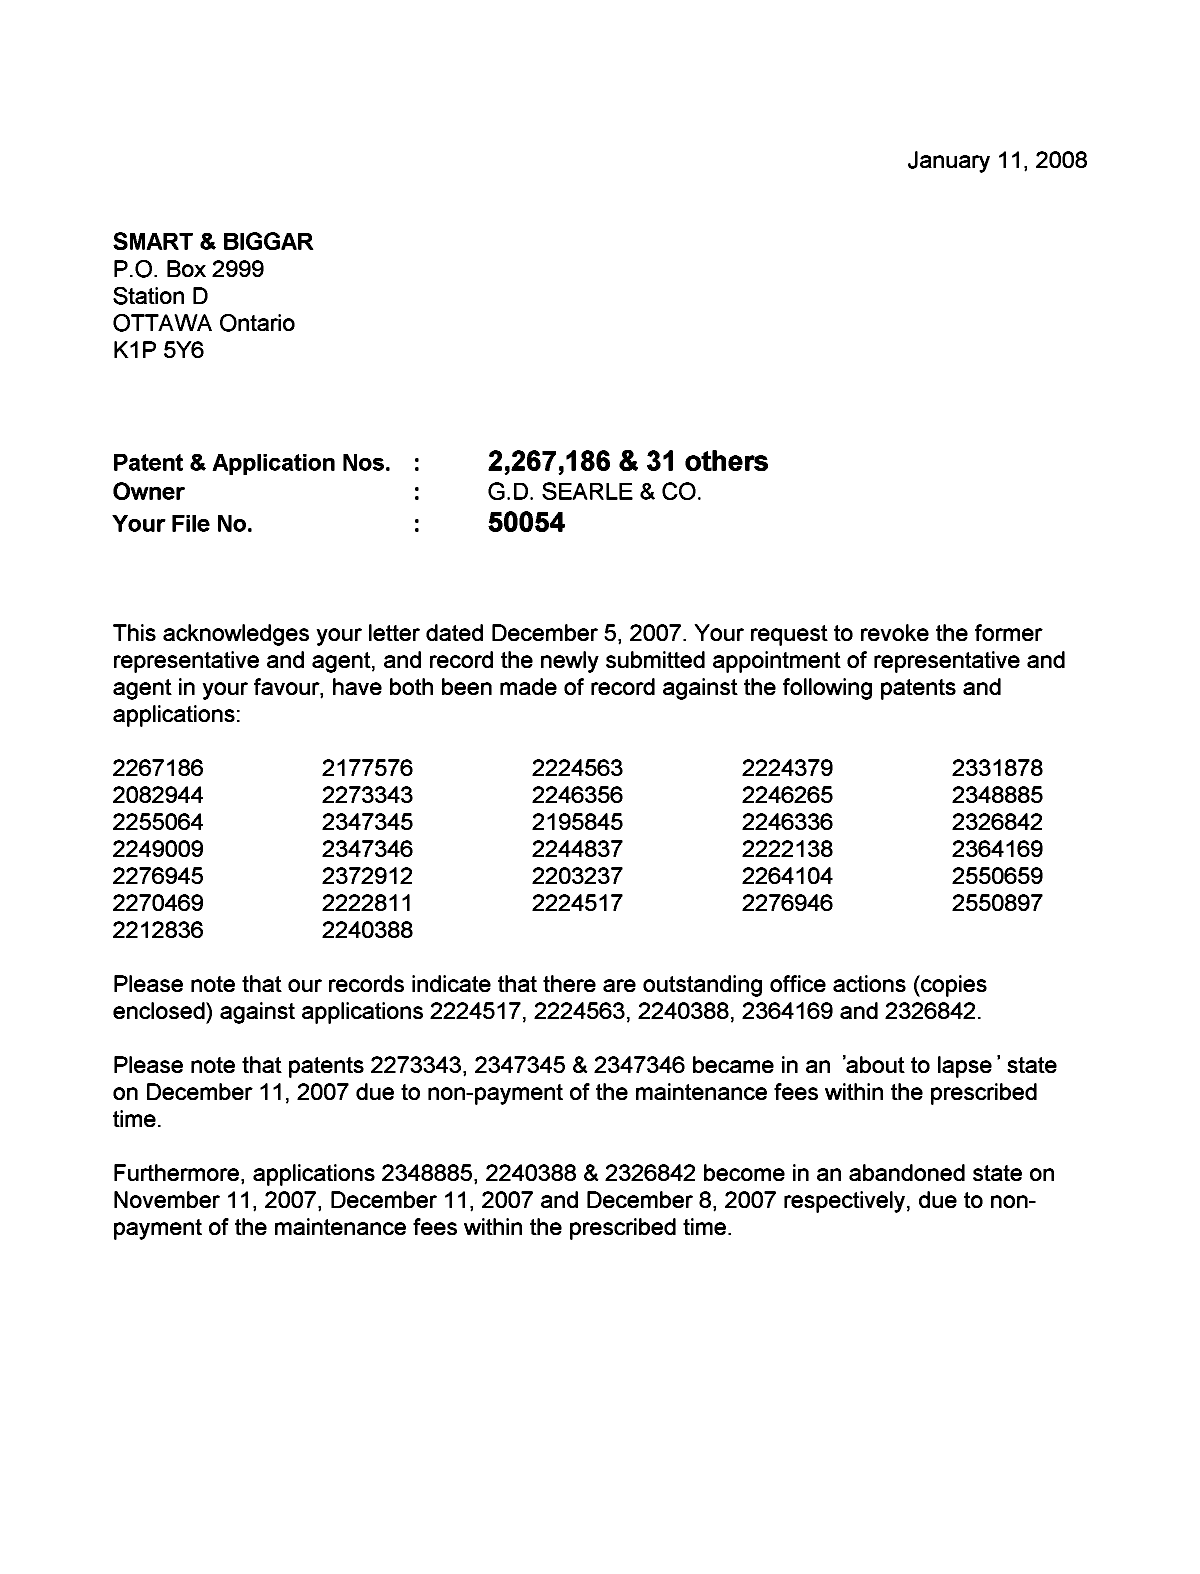 Canadian Patent Document 2177576. Correspondence 20071211. Image 1 of 2